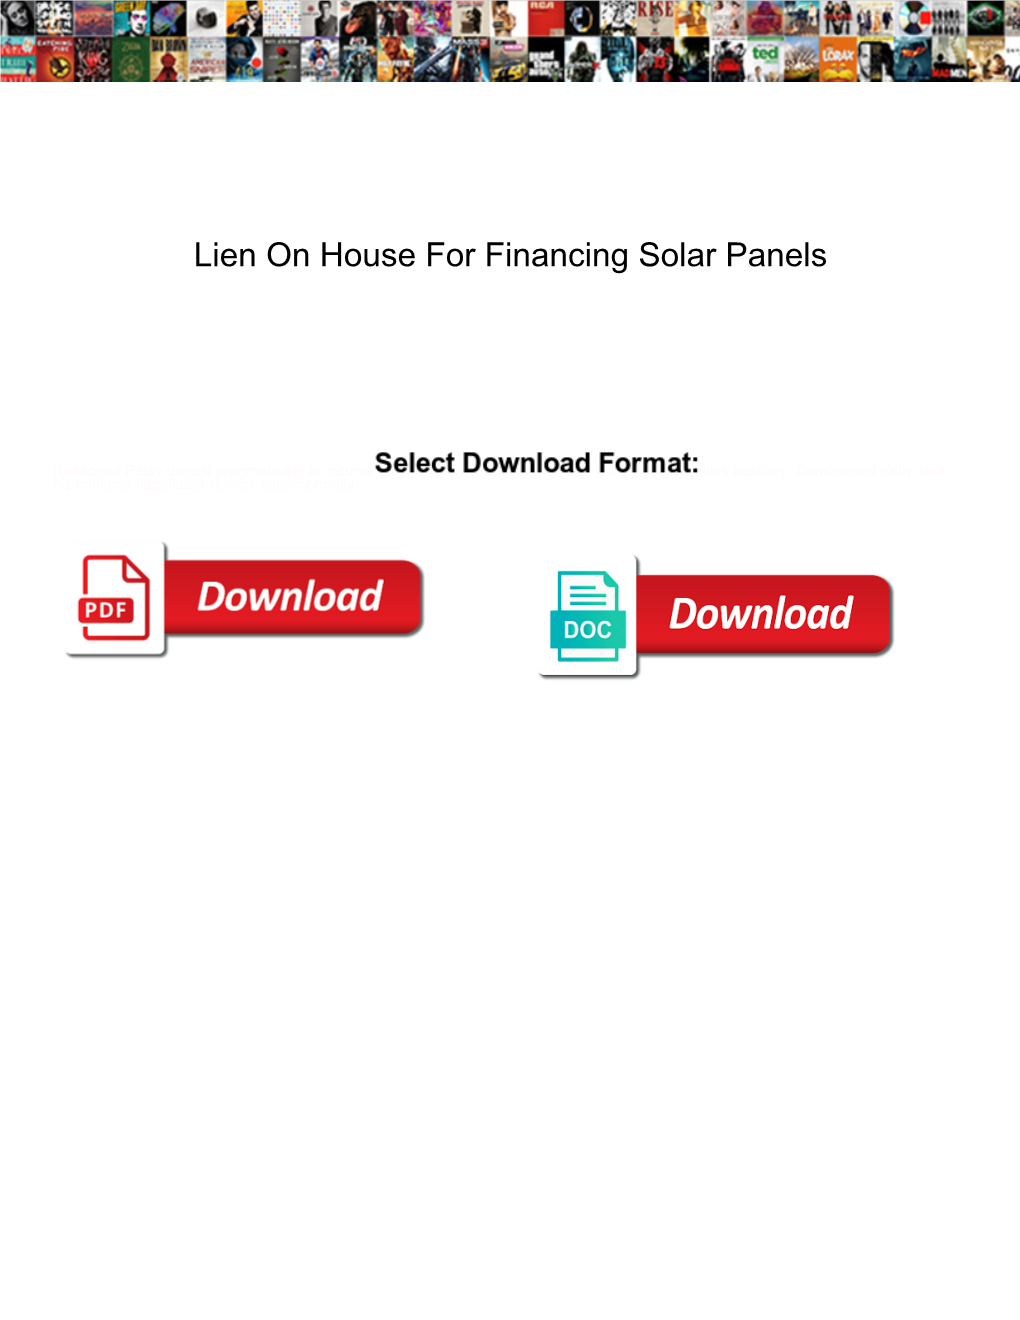 Lien on House for Financing Solar Panels